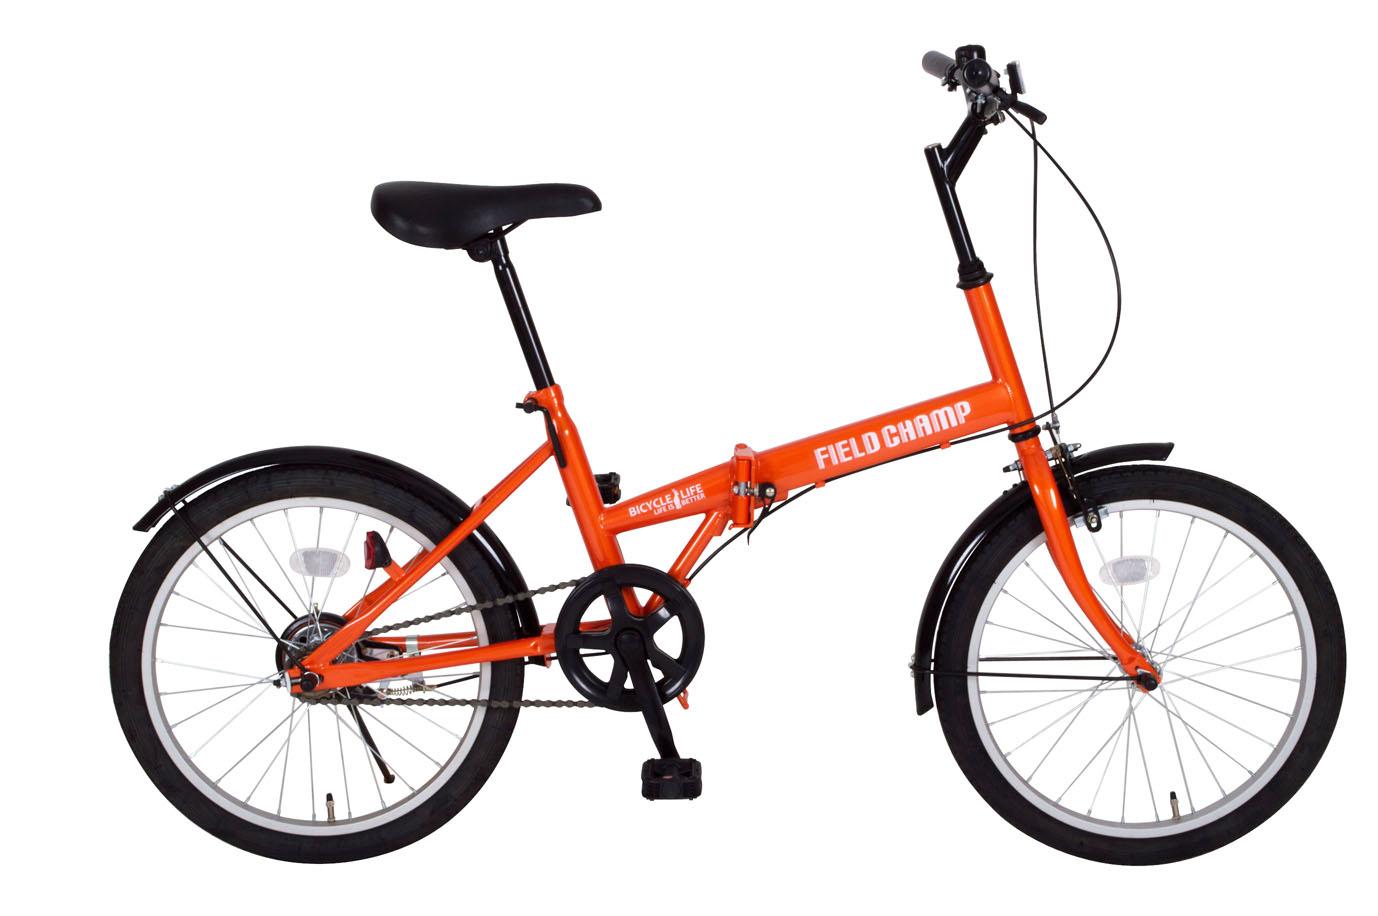 【FIELD CHAMP】折りたたみ自転車 20インチ オレンジ